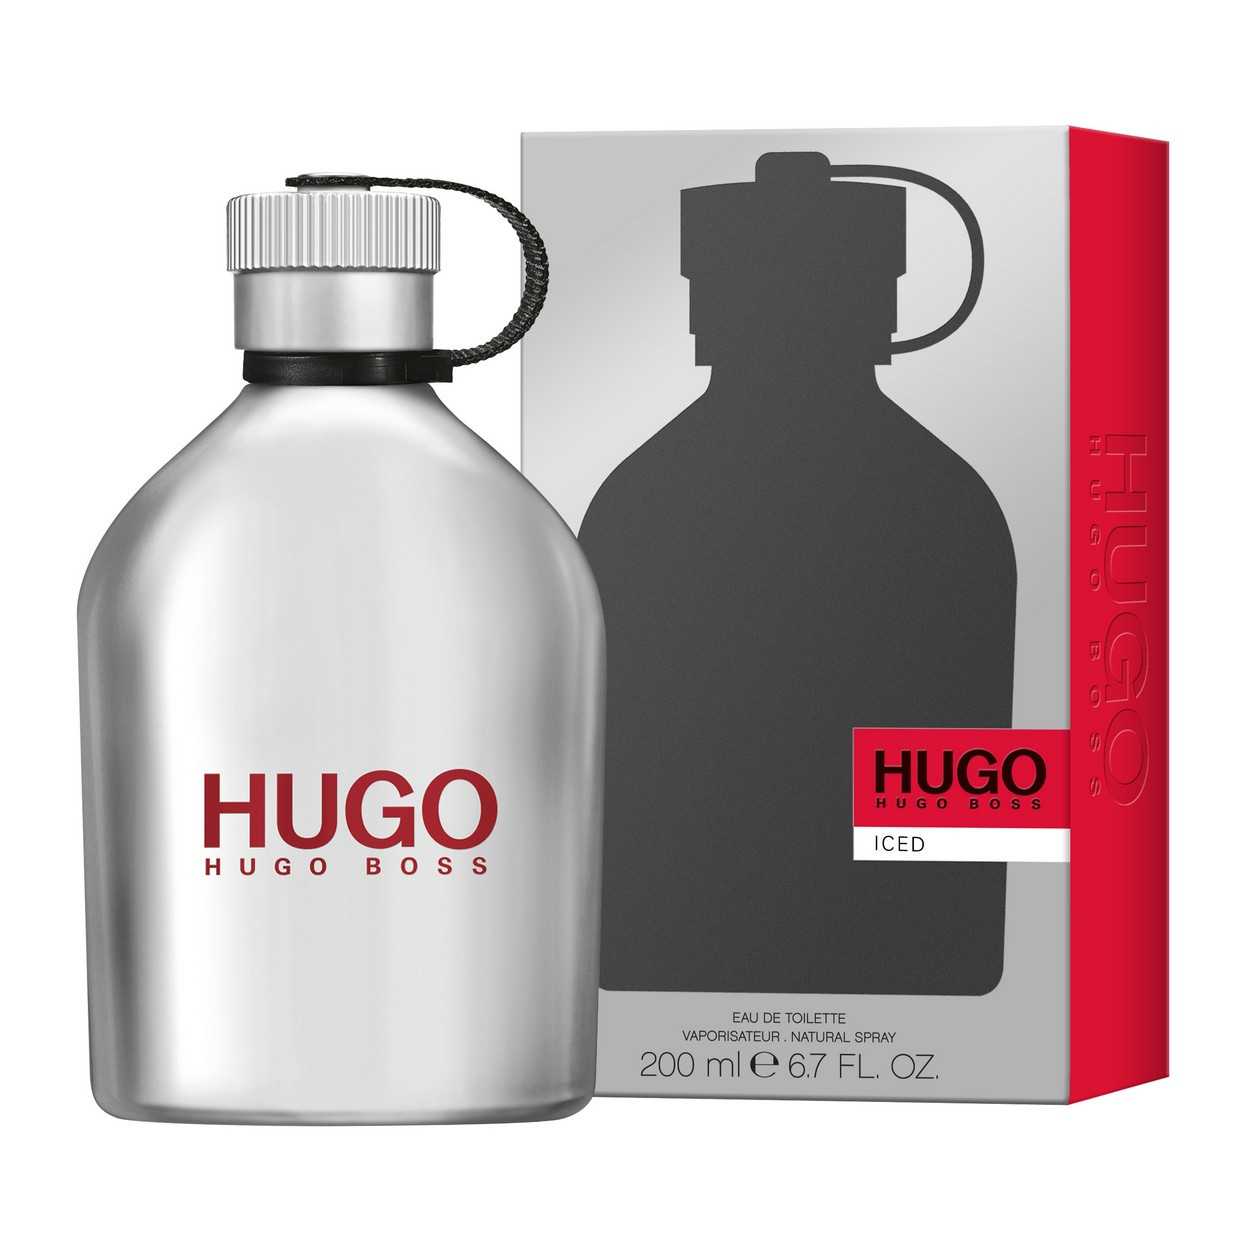 Hugo Iced Eau De Toilette Eclair Parfumeries